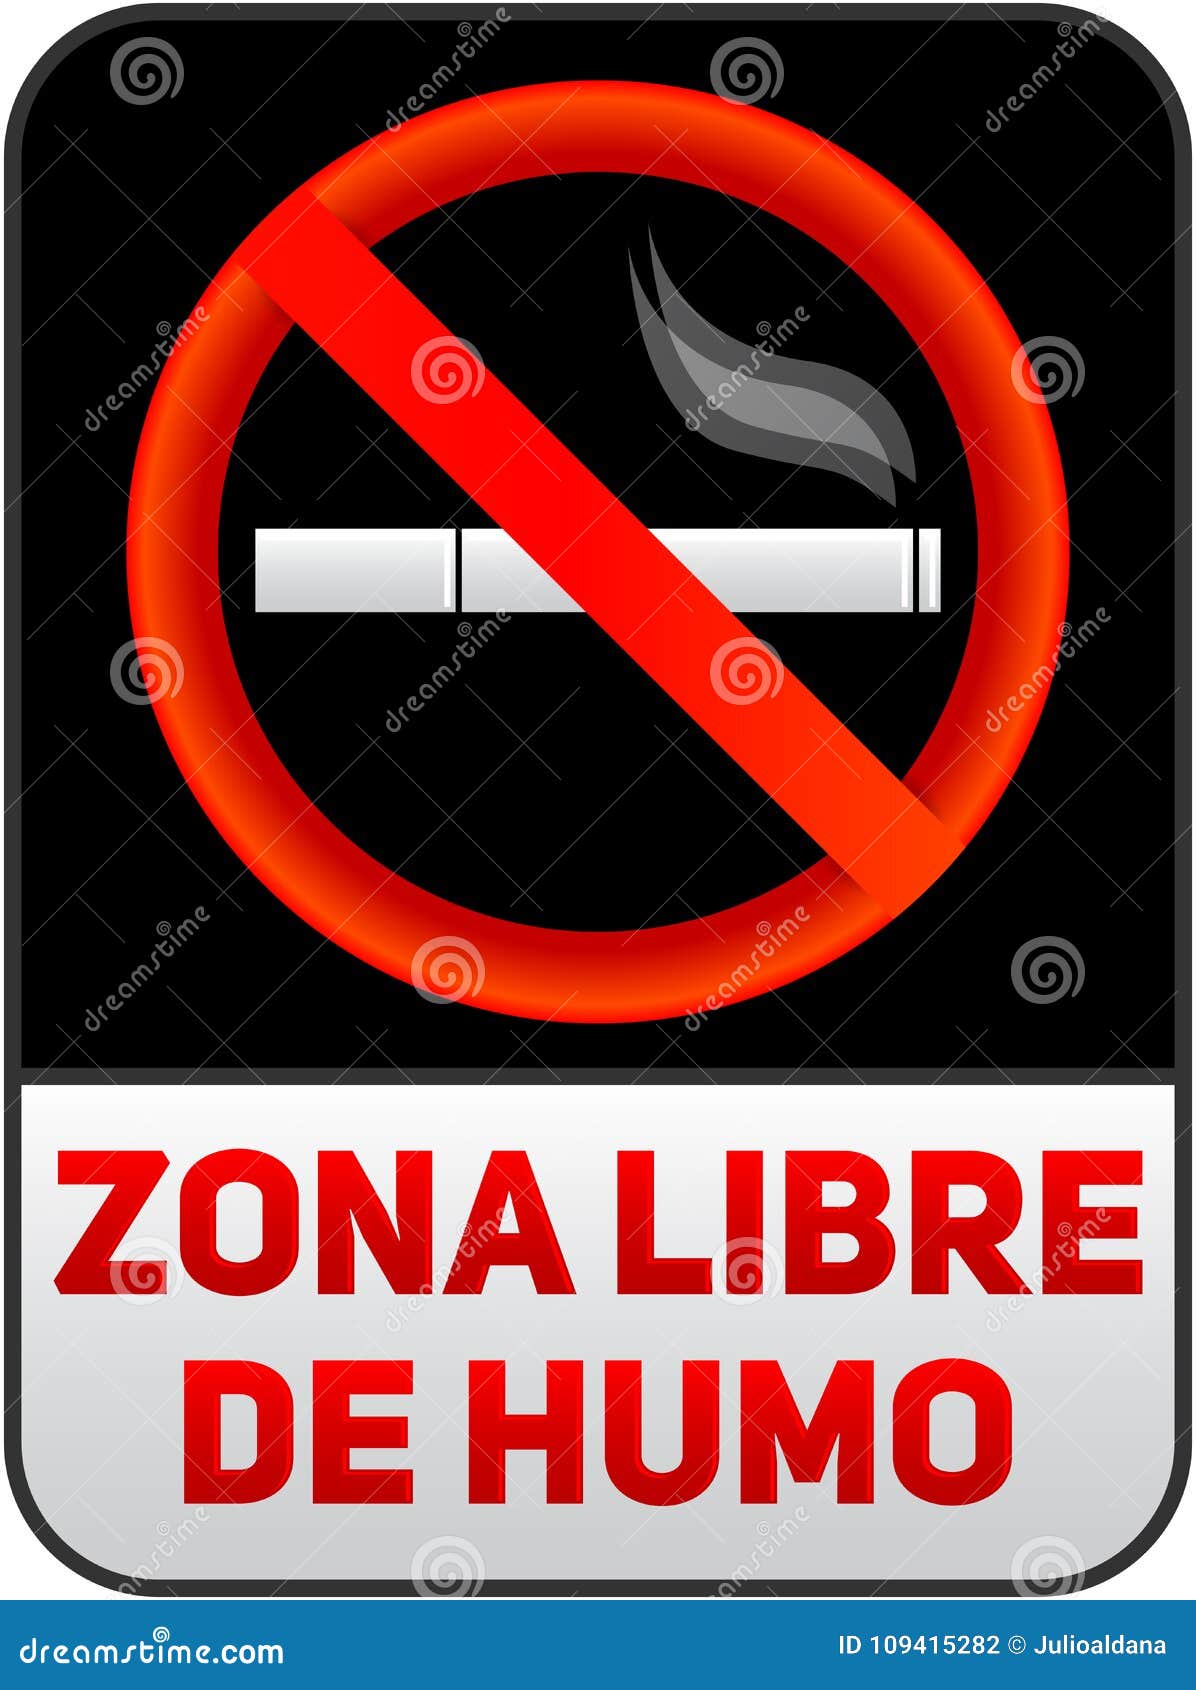 zona libre de humo, smoke free zone spanish text